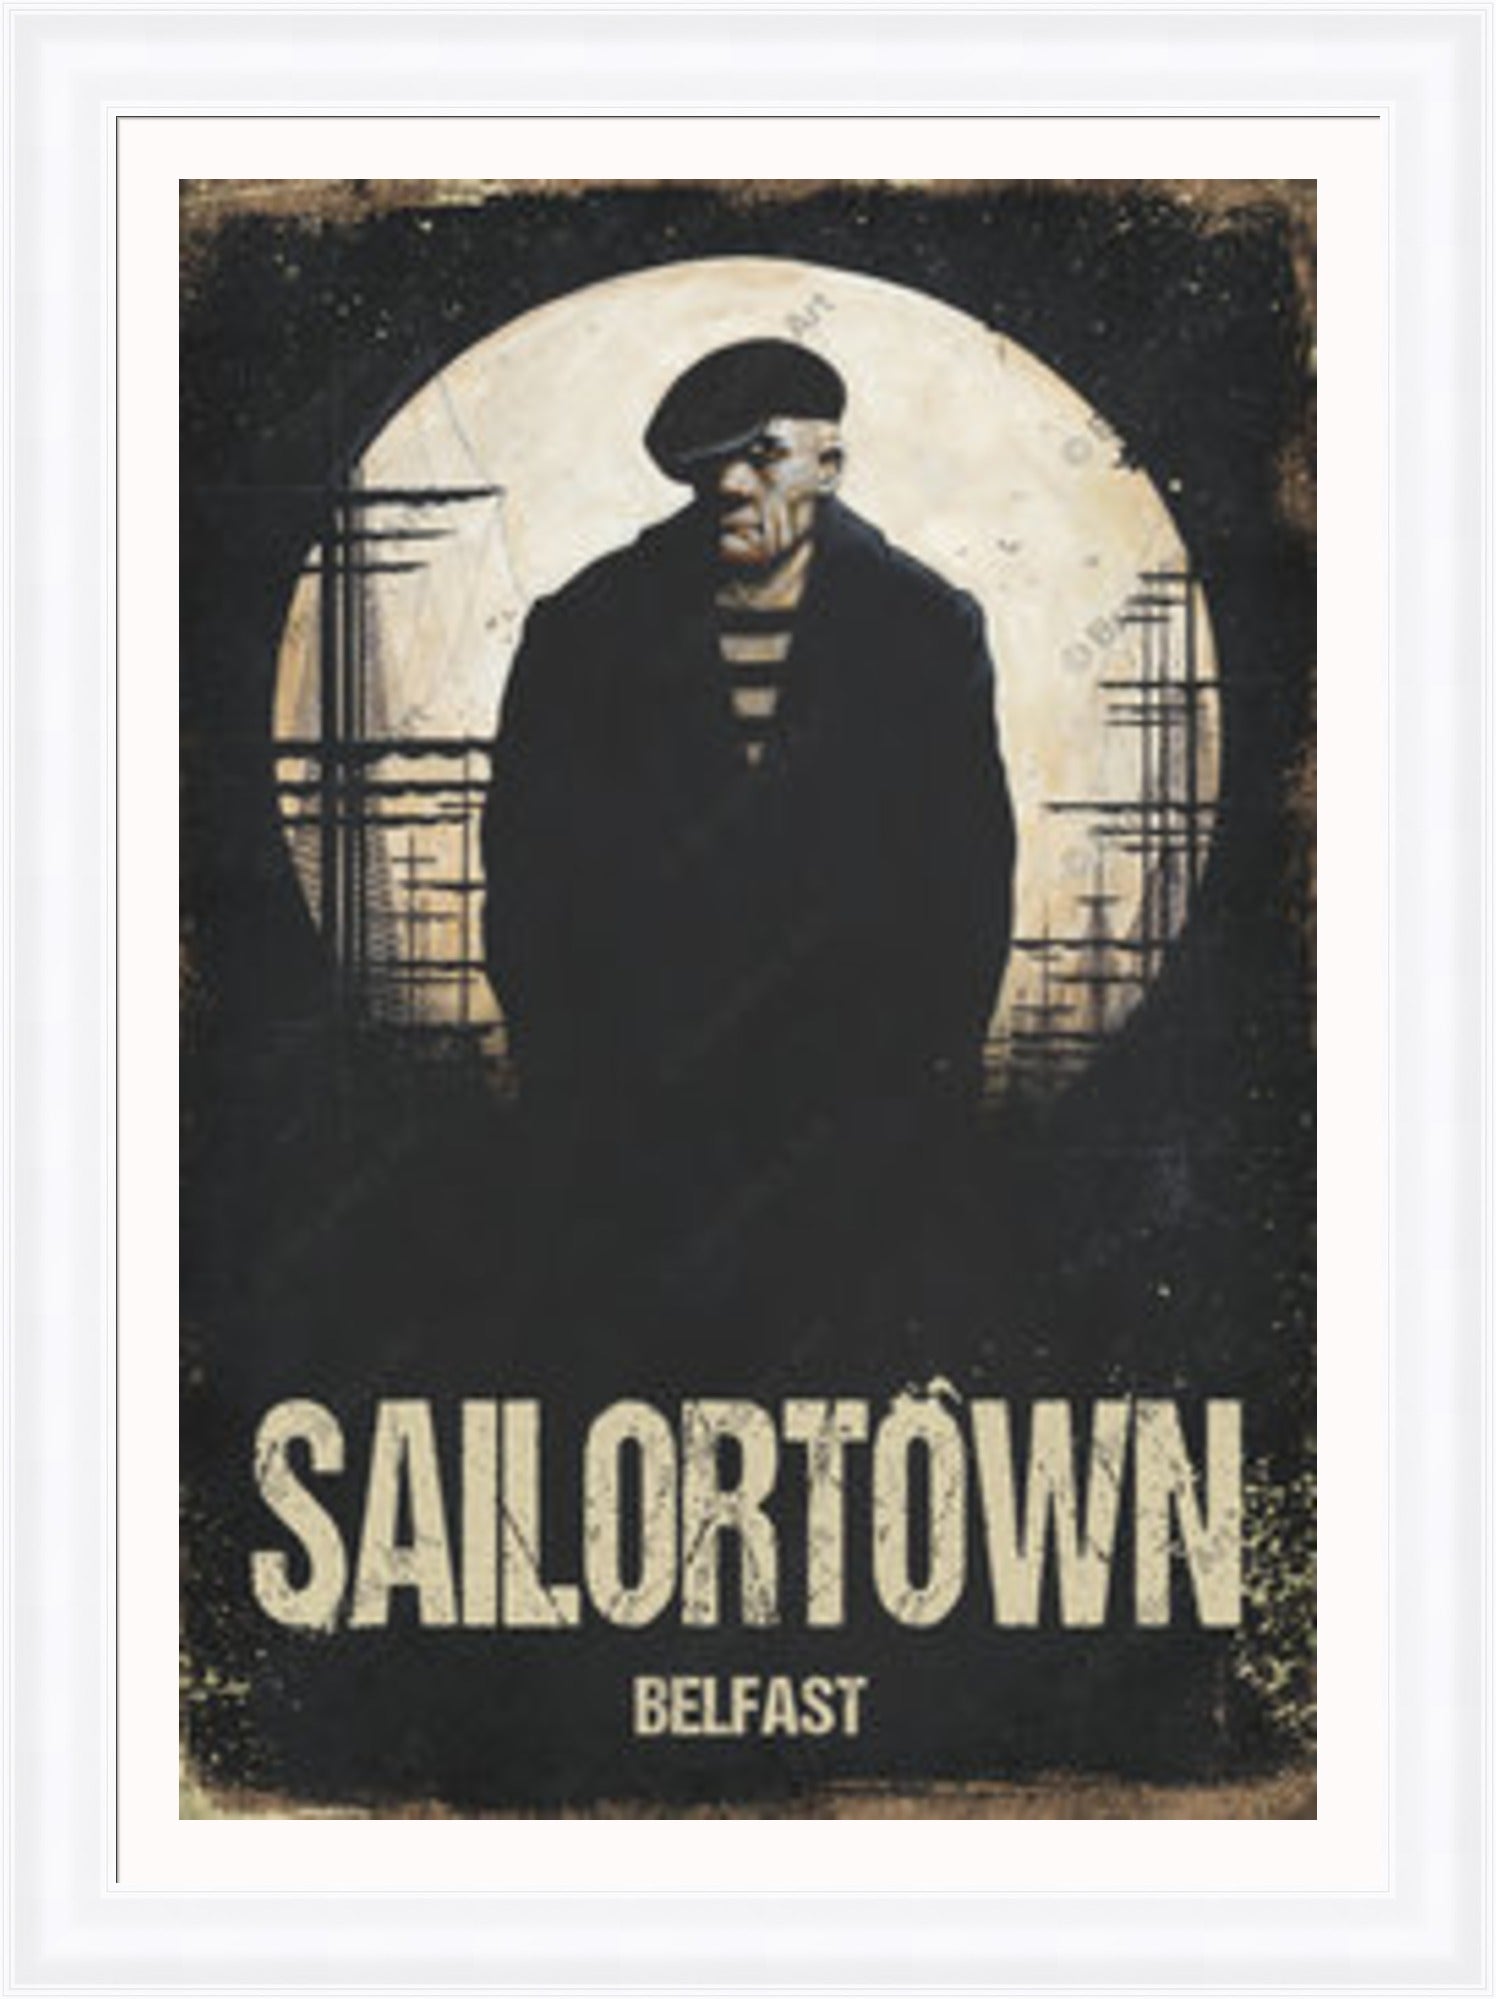 "Sailortown Belfast" HE Canvas